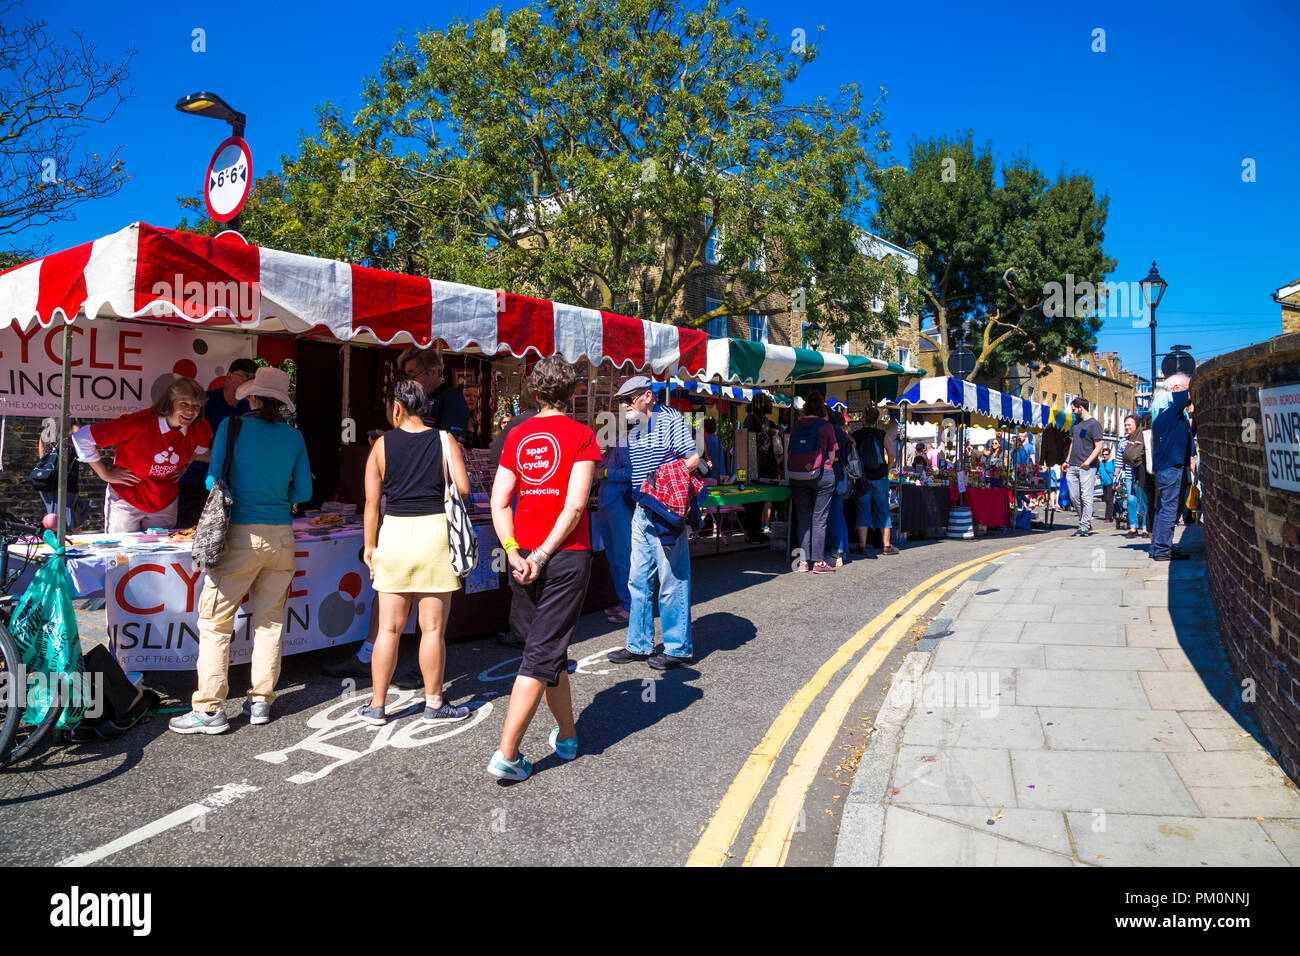 Marktstände entlang Danbury Street während Engel Canal Festival 2018, London. Großbritannien Stockfoto